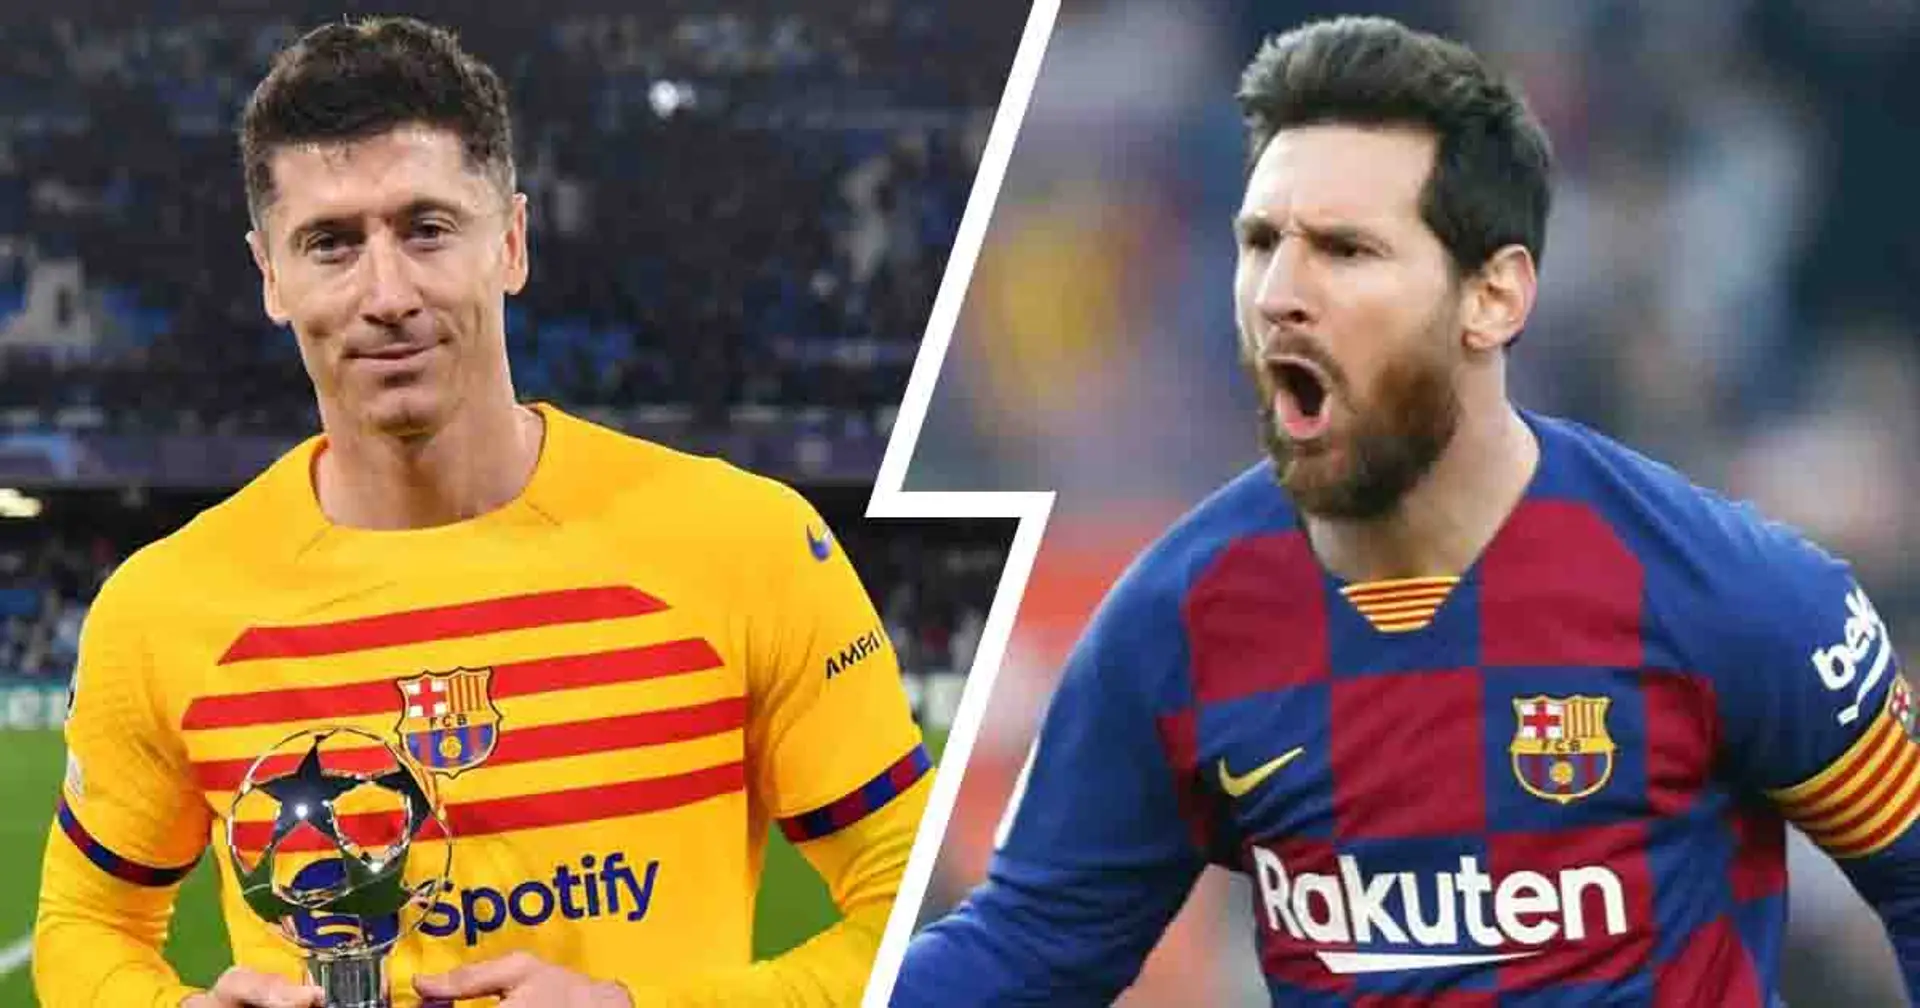 Lewandowski surpasses Messi in setting new Barca record